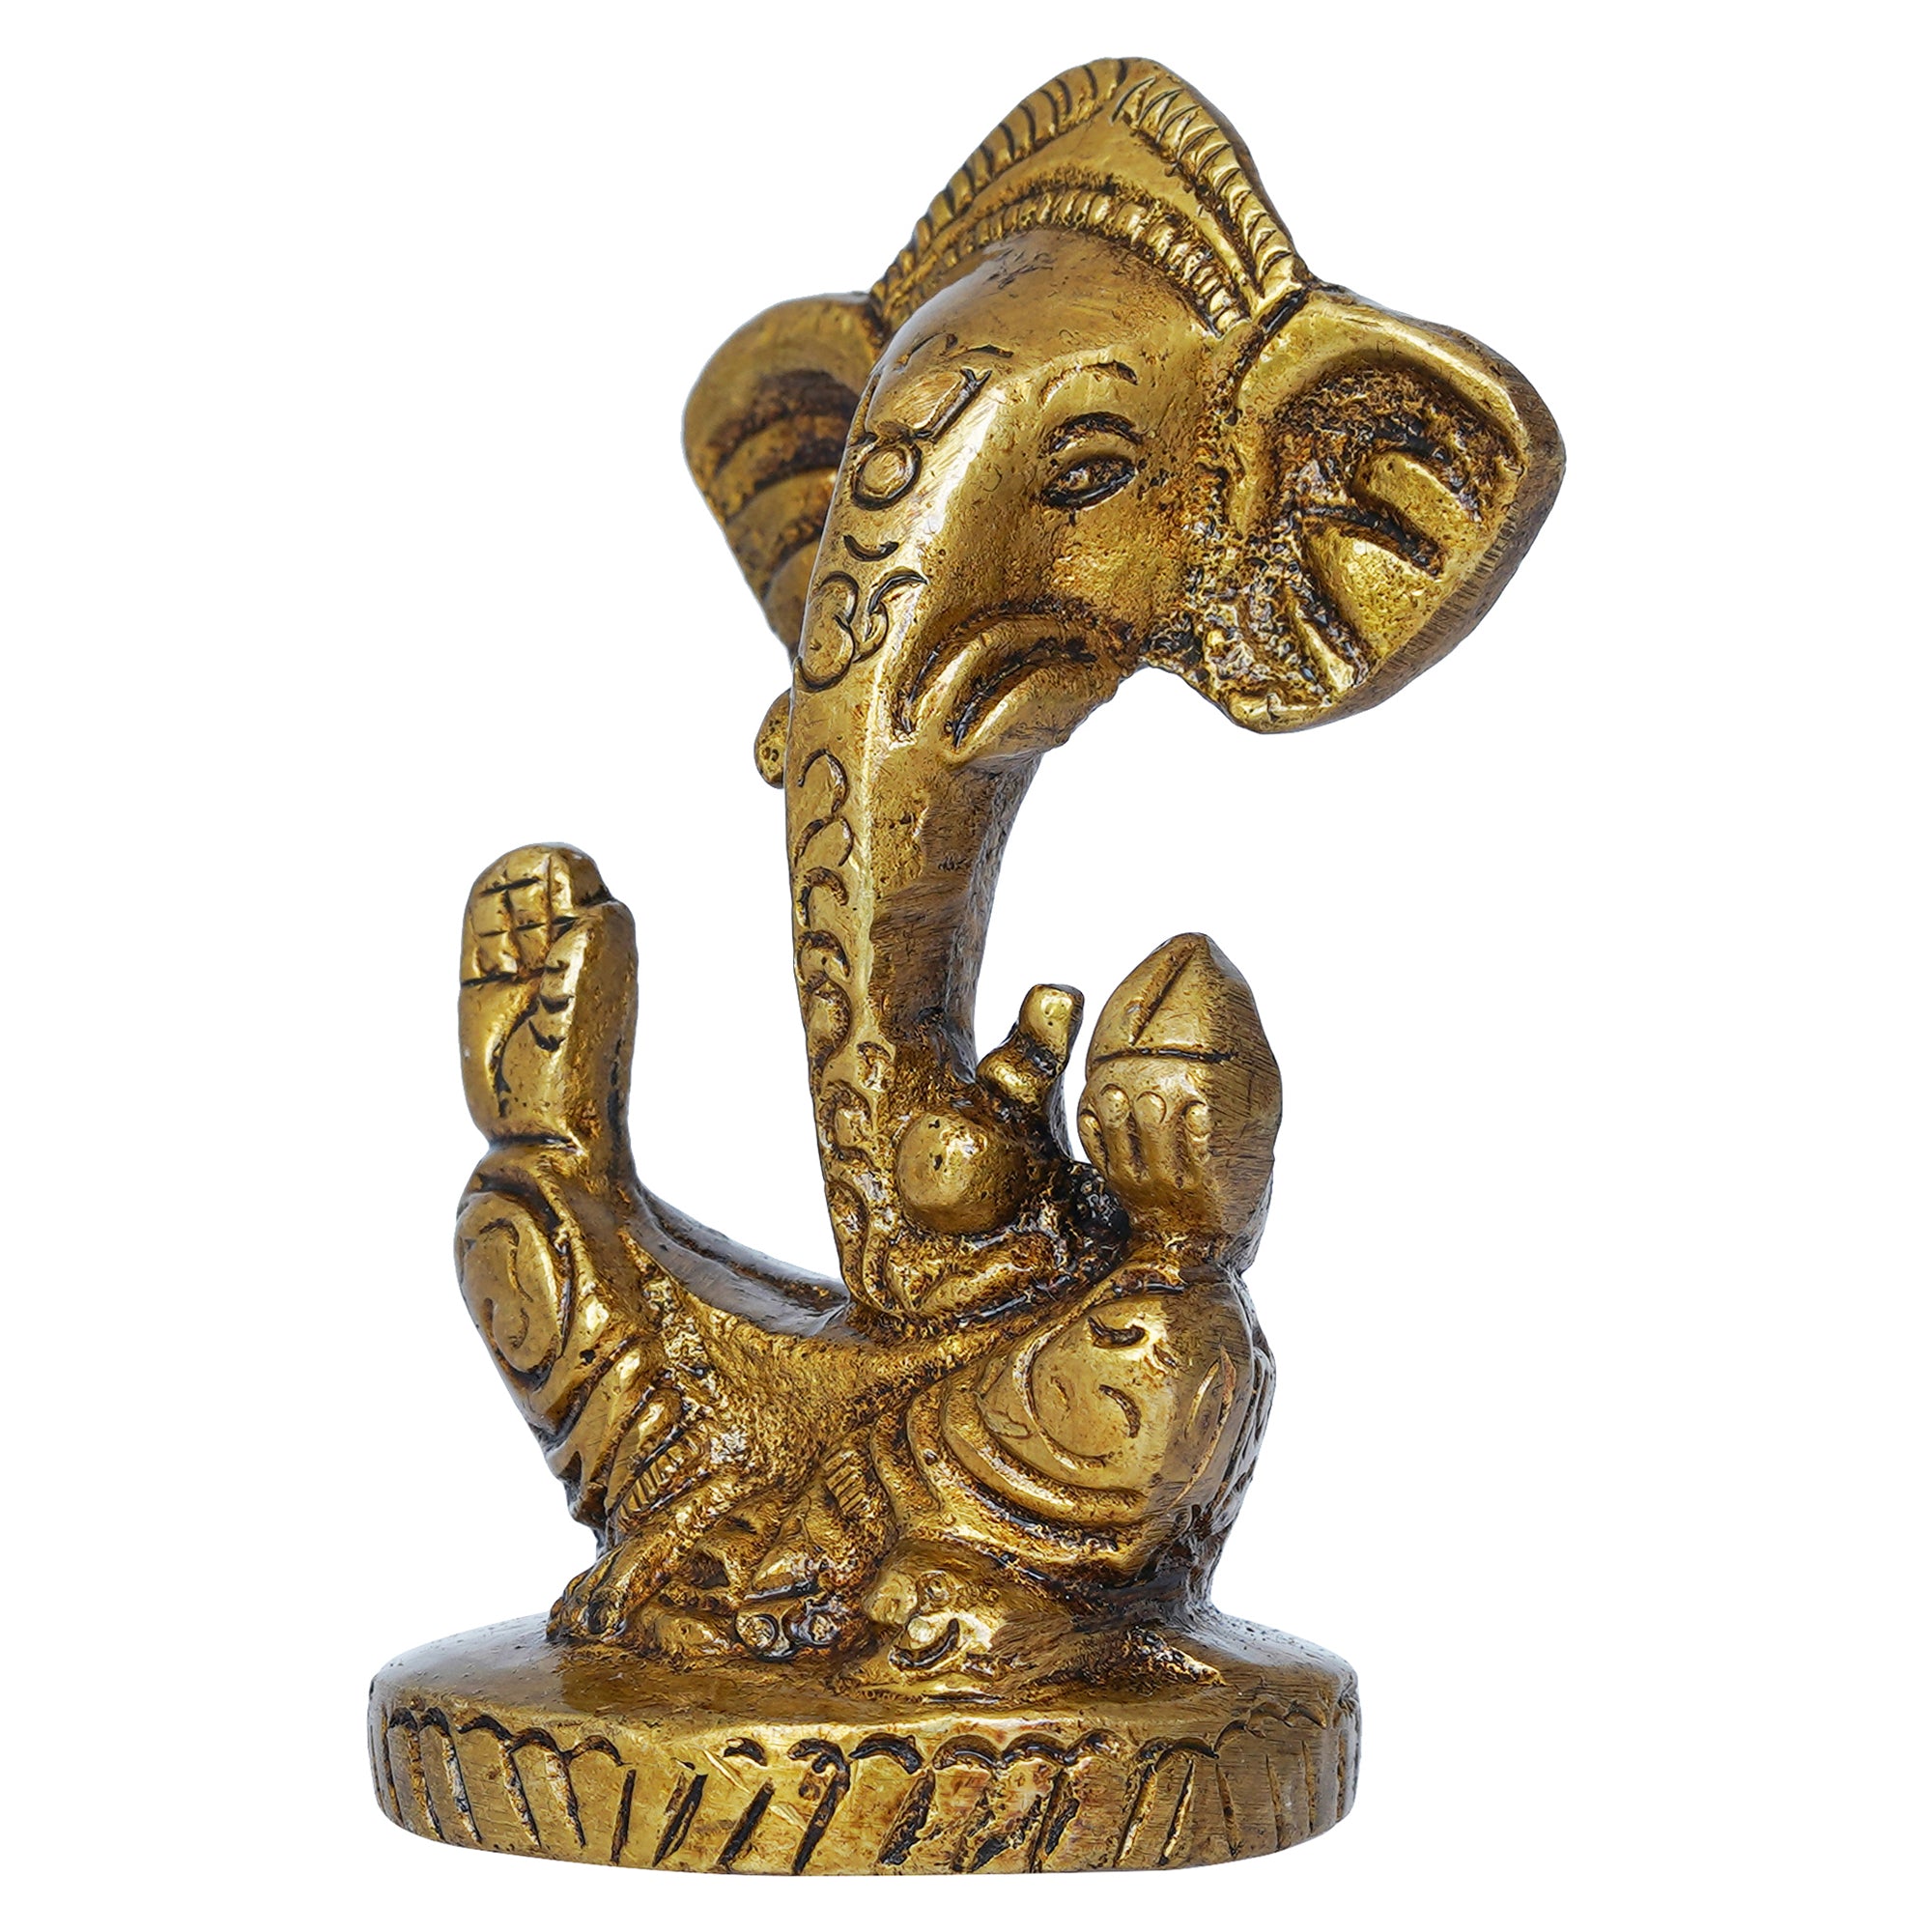 Golden Brass Blessing Lord Ganesha Idol Murti - God Statue for Car Dashboard, Home Decor, Office Desk, Temple Mandir 6